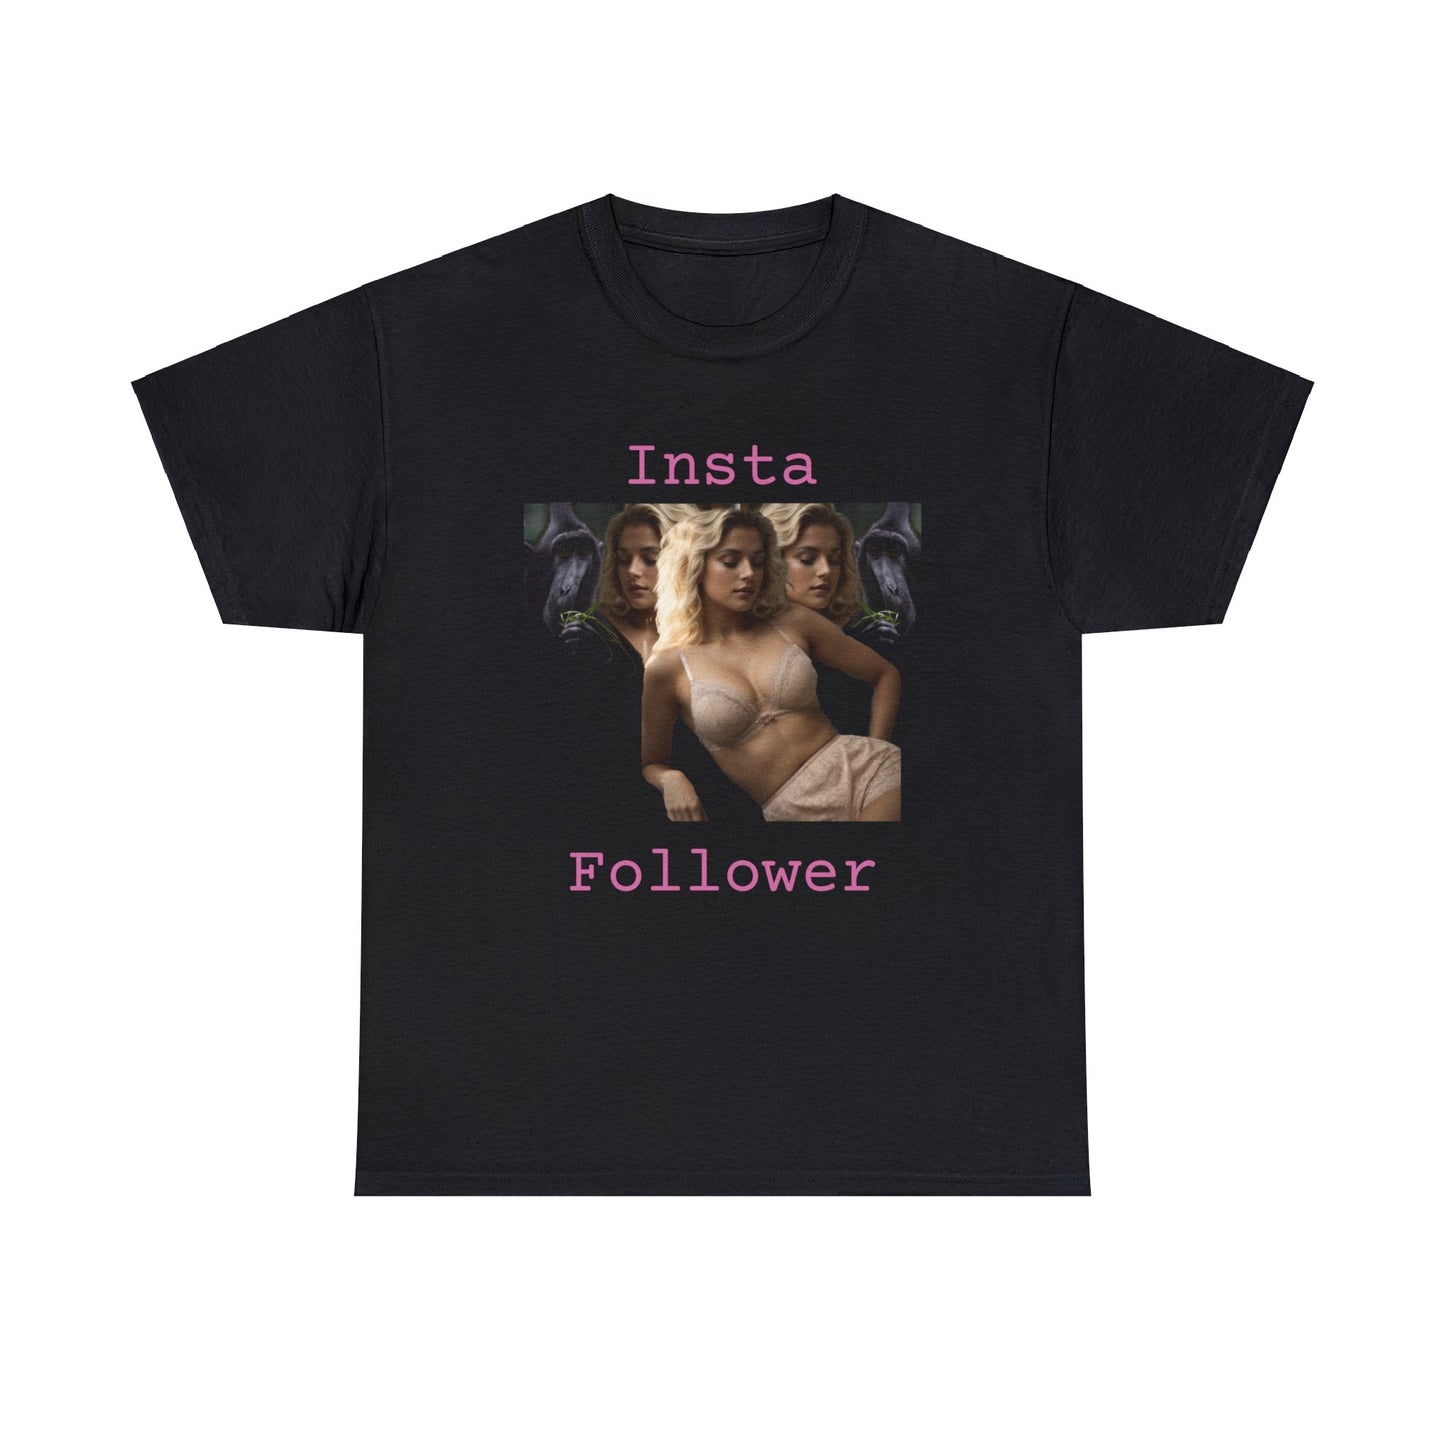 Insta Follower II - Hurts Shirts Collection